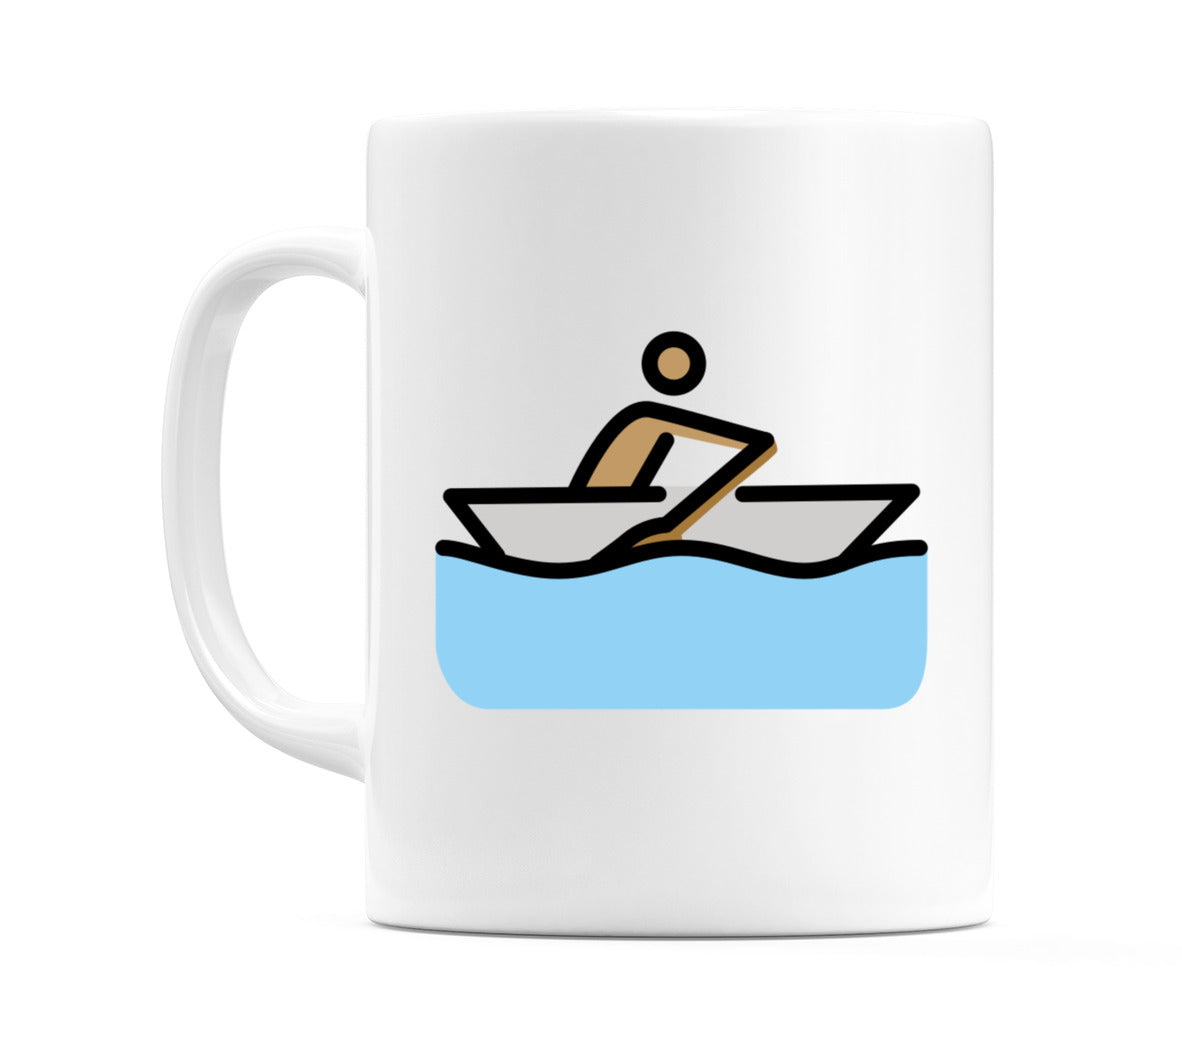 Male Rowing Boat: Medium Skin Tone Emoji Mug